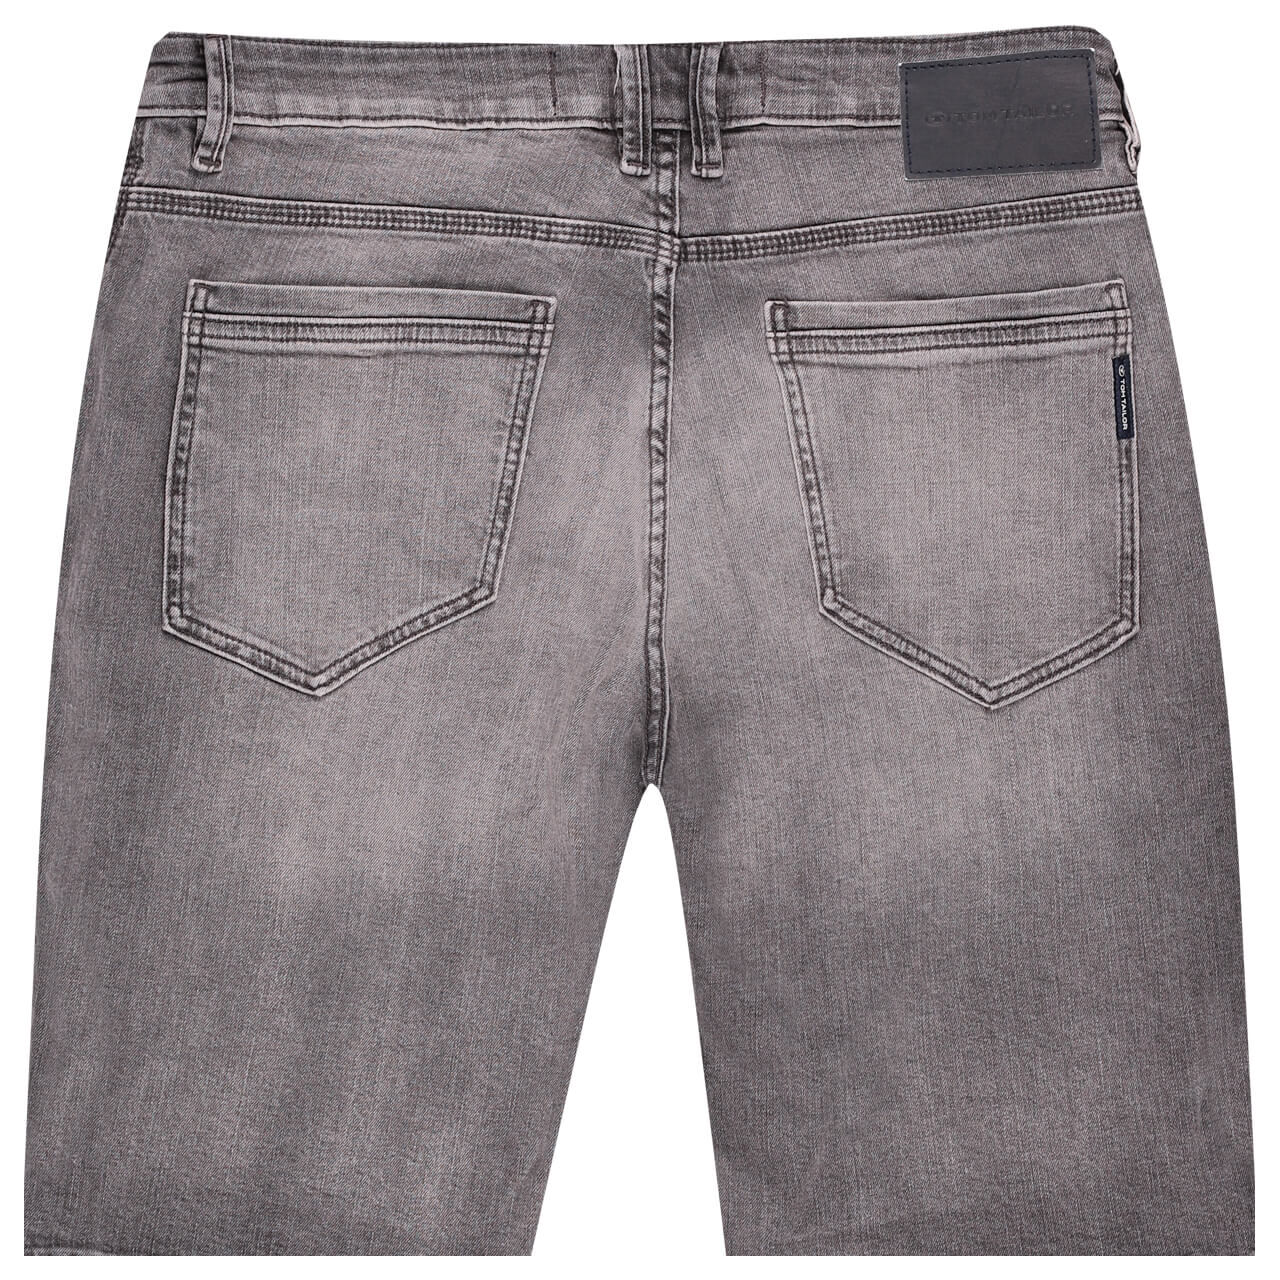 Tom Tailor Jeans Josh Bermuda clean used mid stone grey